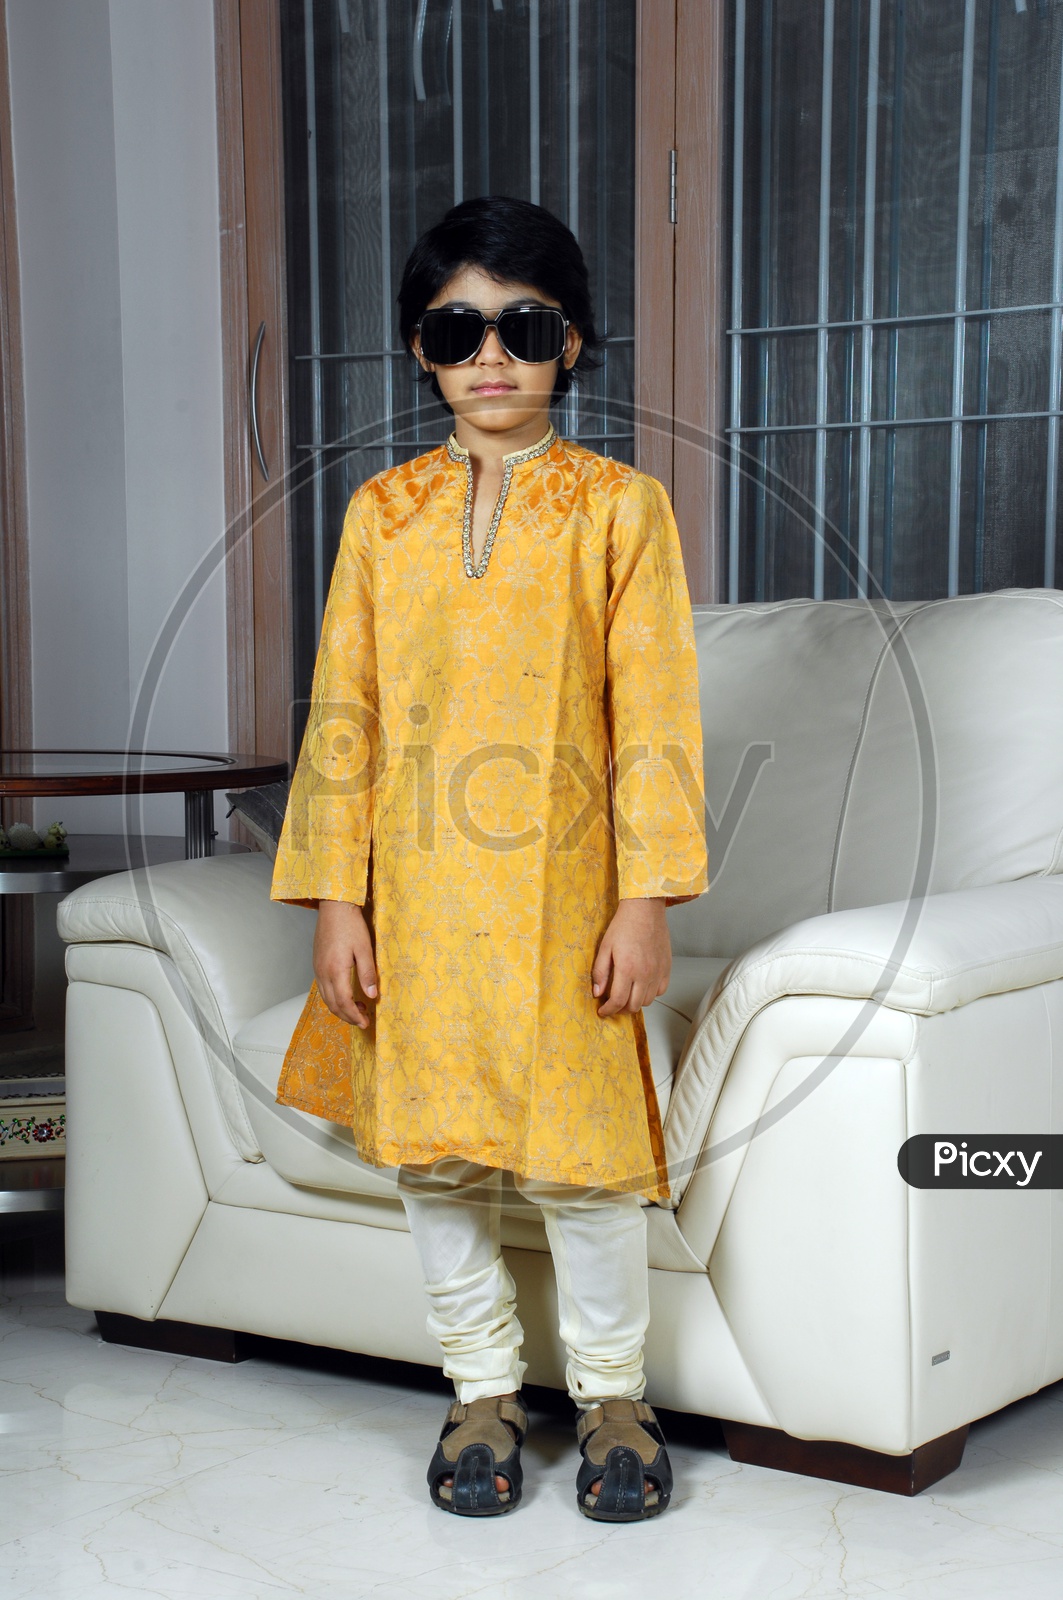 Indian boy wearing kurta pyjama and sunglasses